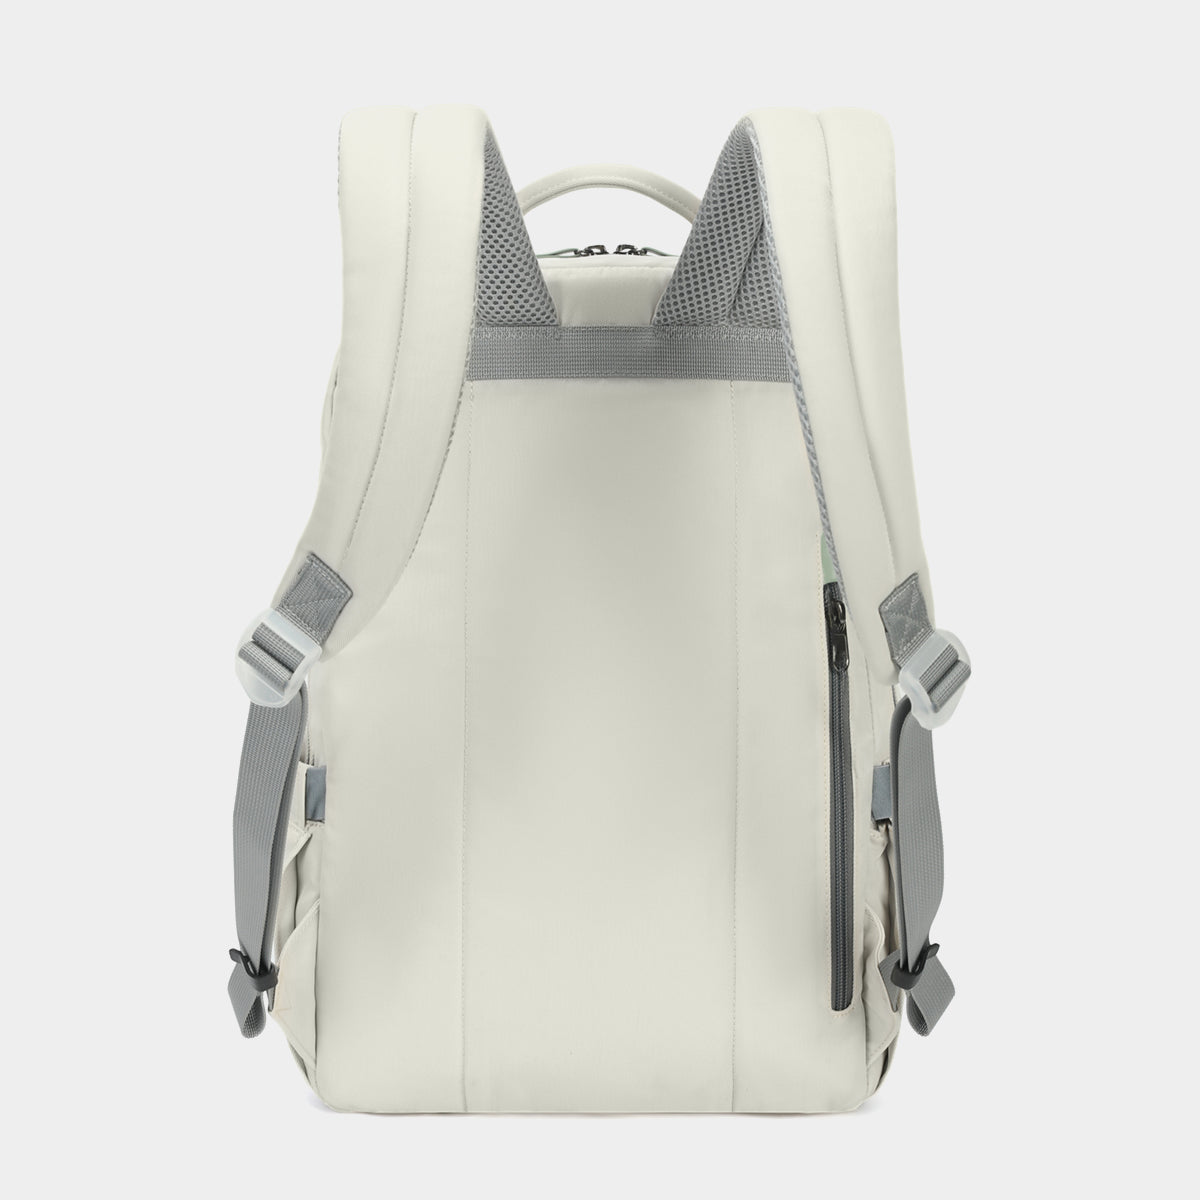 Tigernu T-B9520 Campus School Laptop Backpack Bag